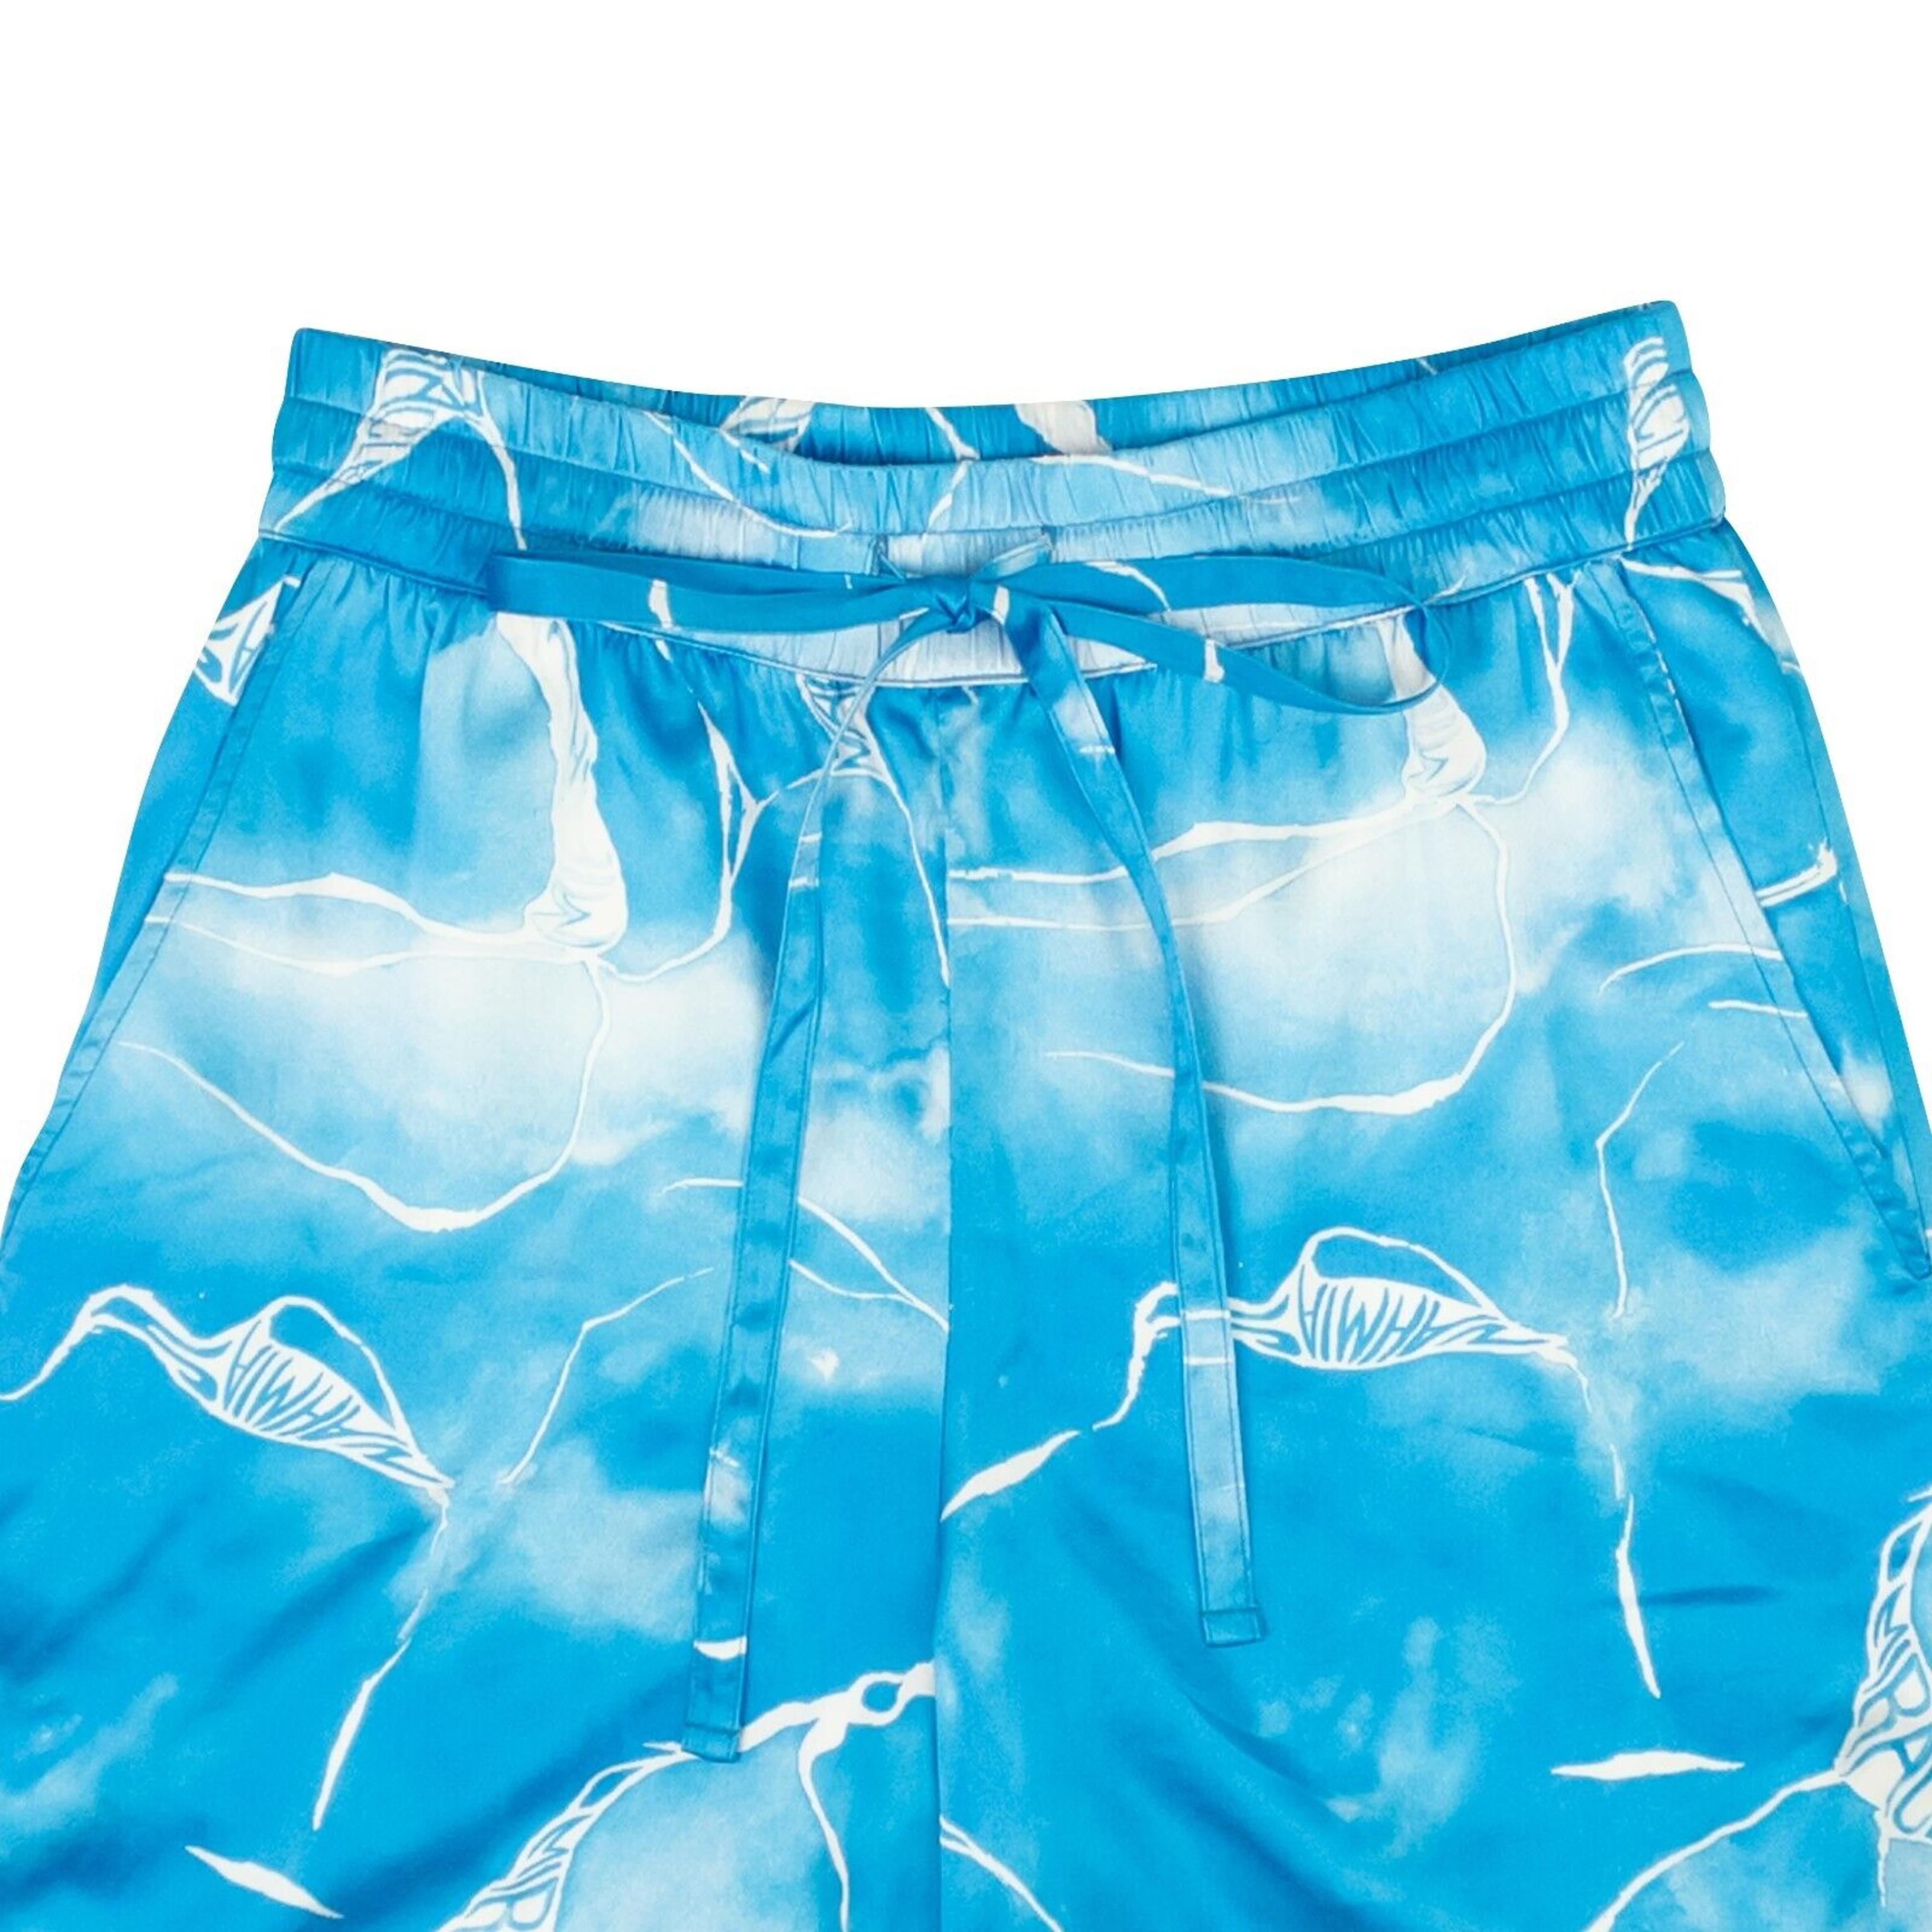 Alternate View 1 of Blue Silk Tie Dye Printed Shorts